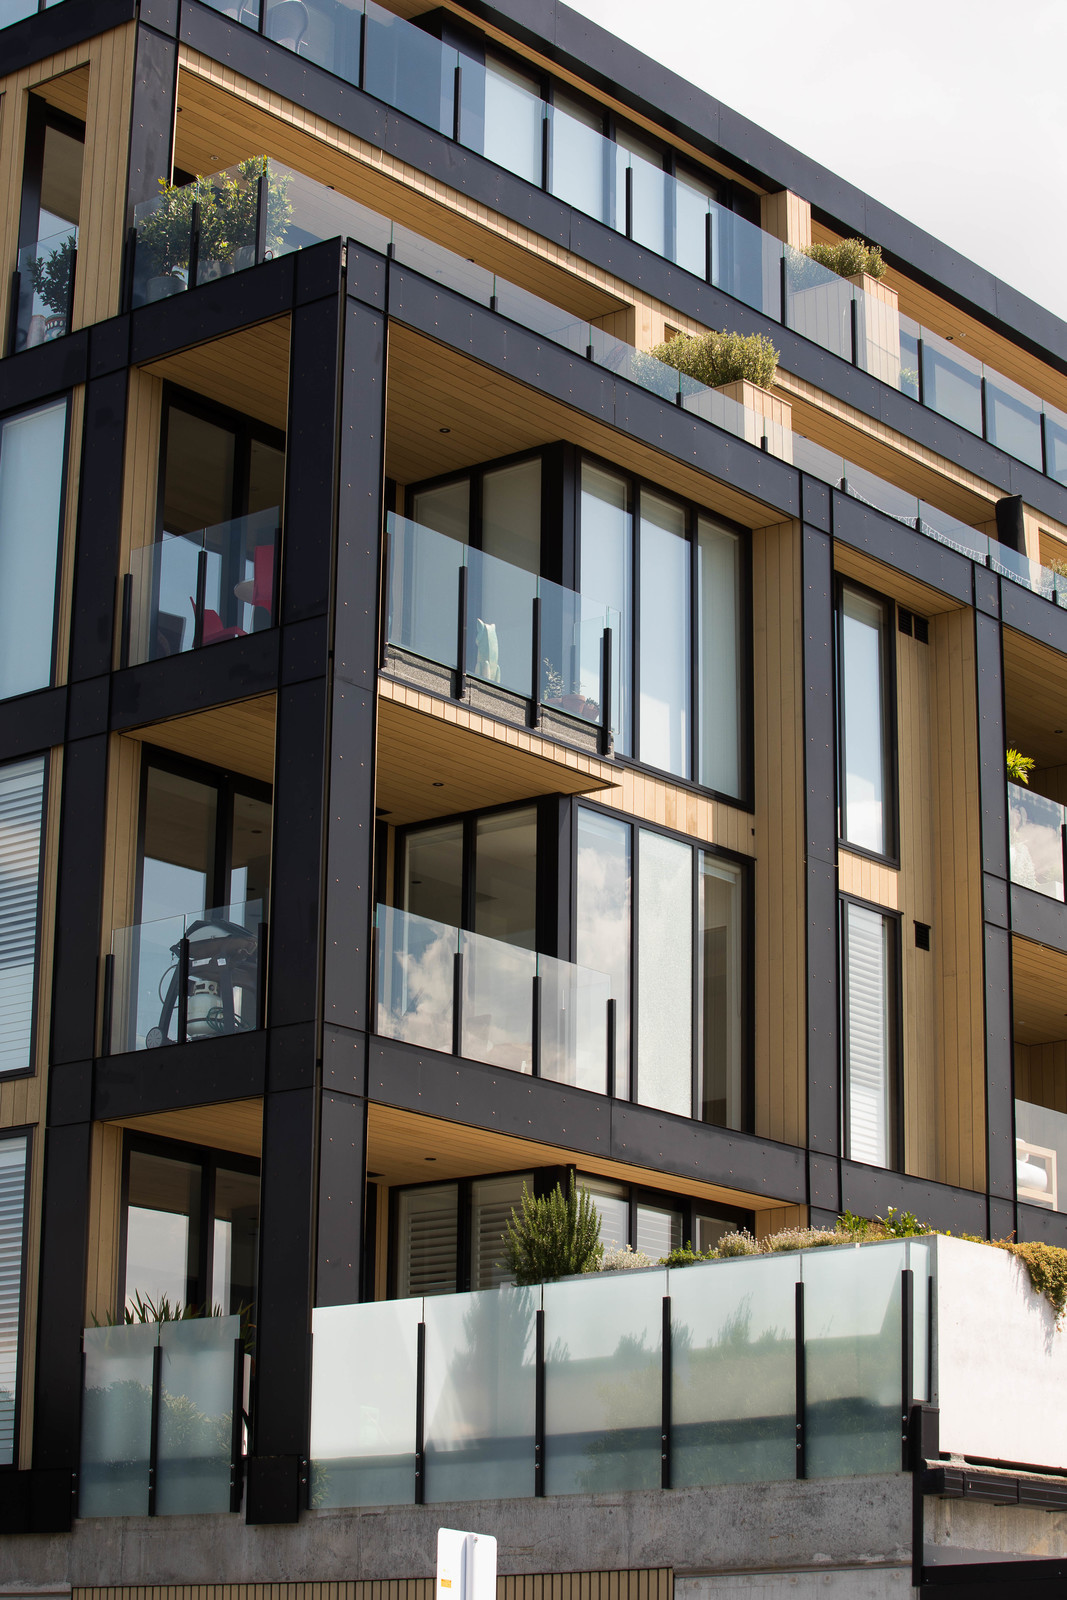 Modern building featuring reflective glass windows and sleek glass balustrades